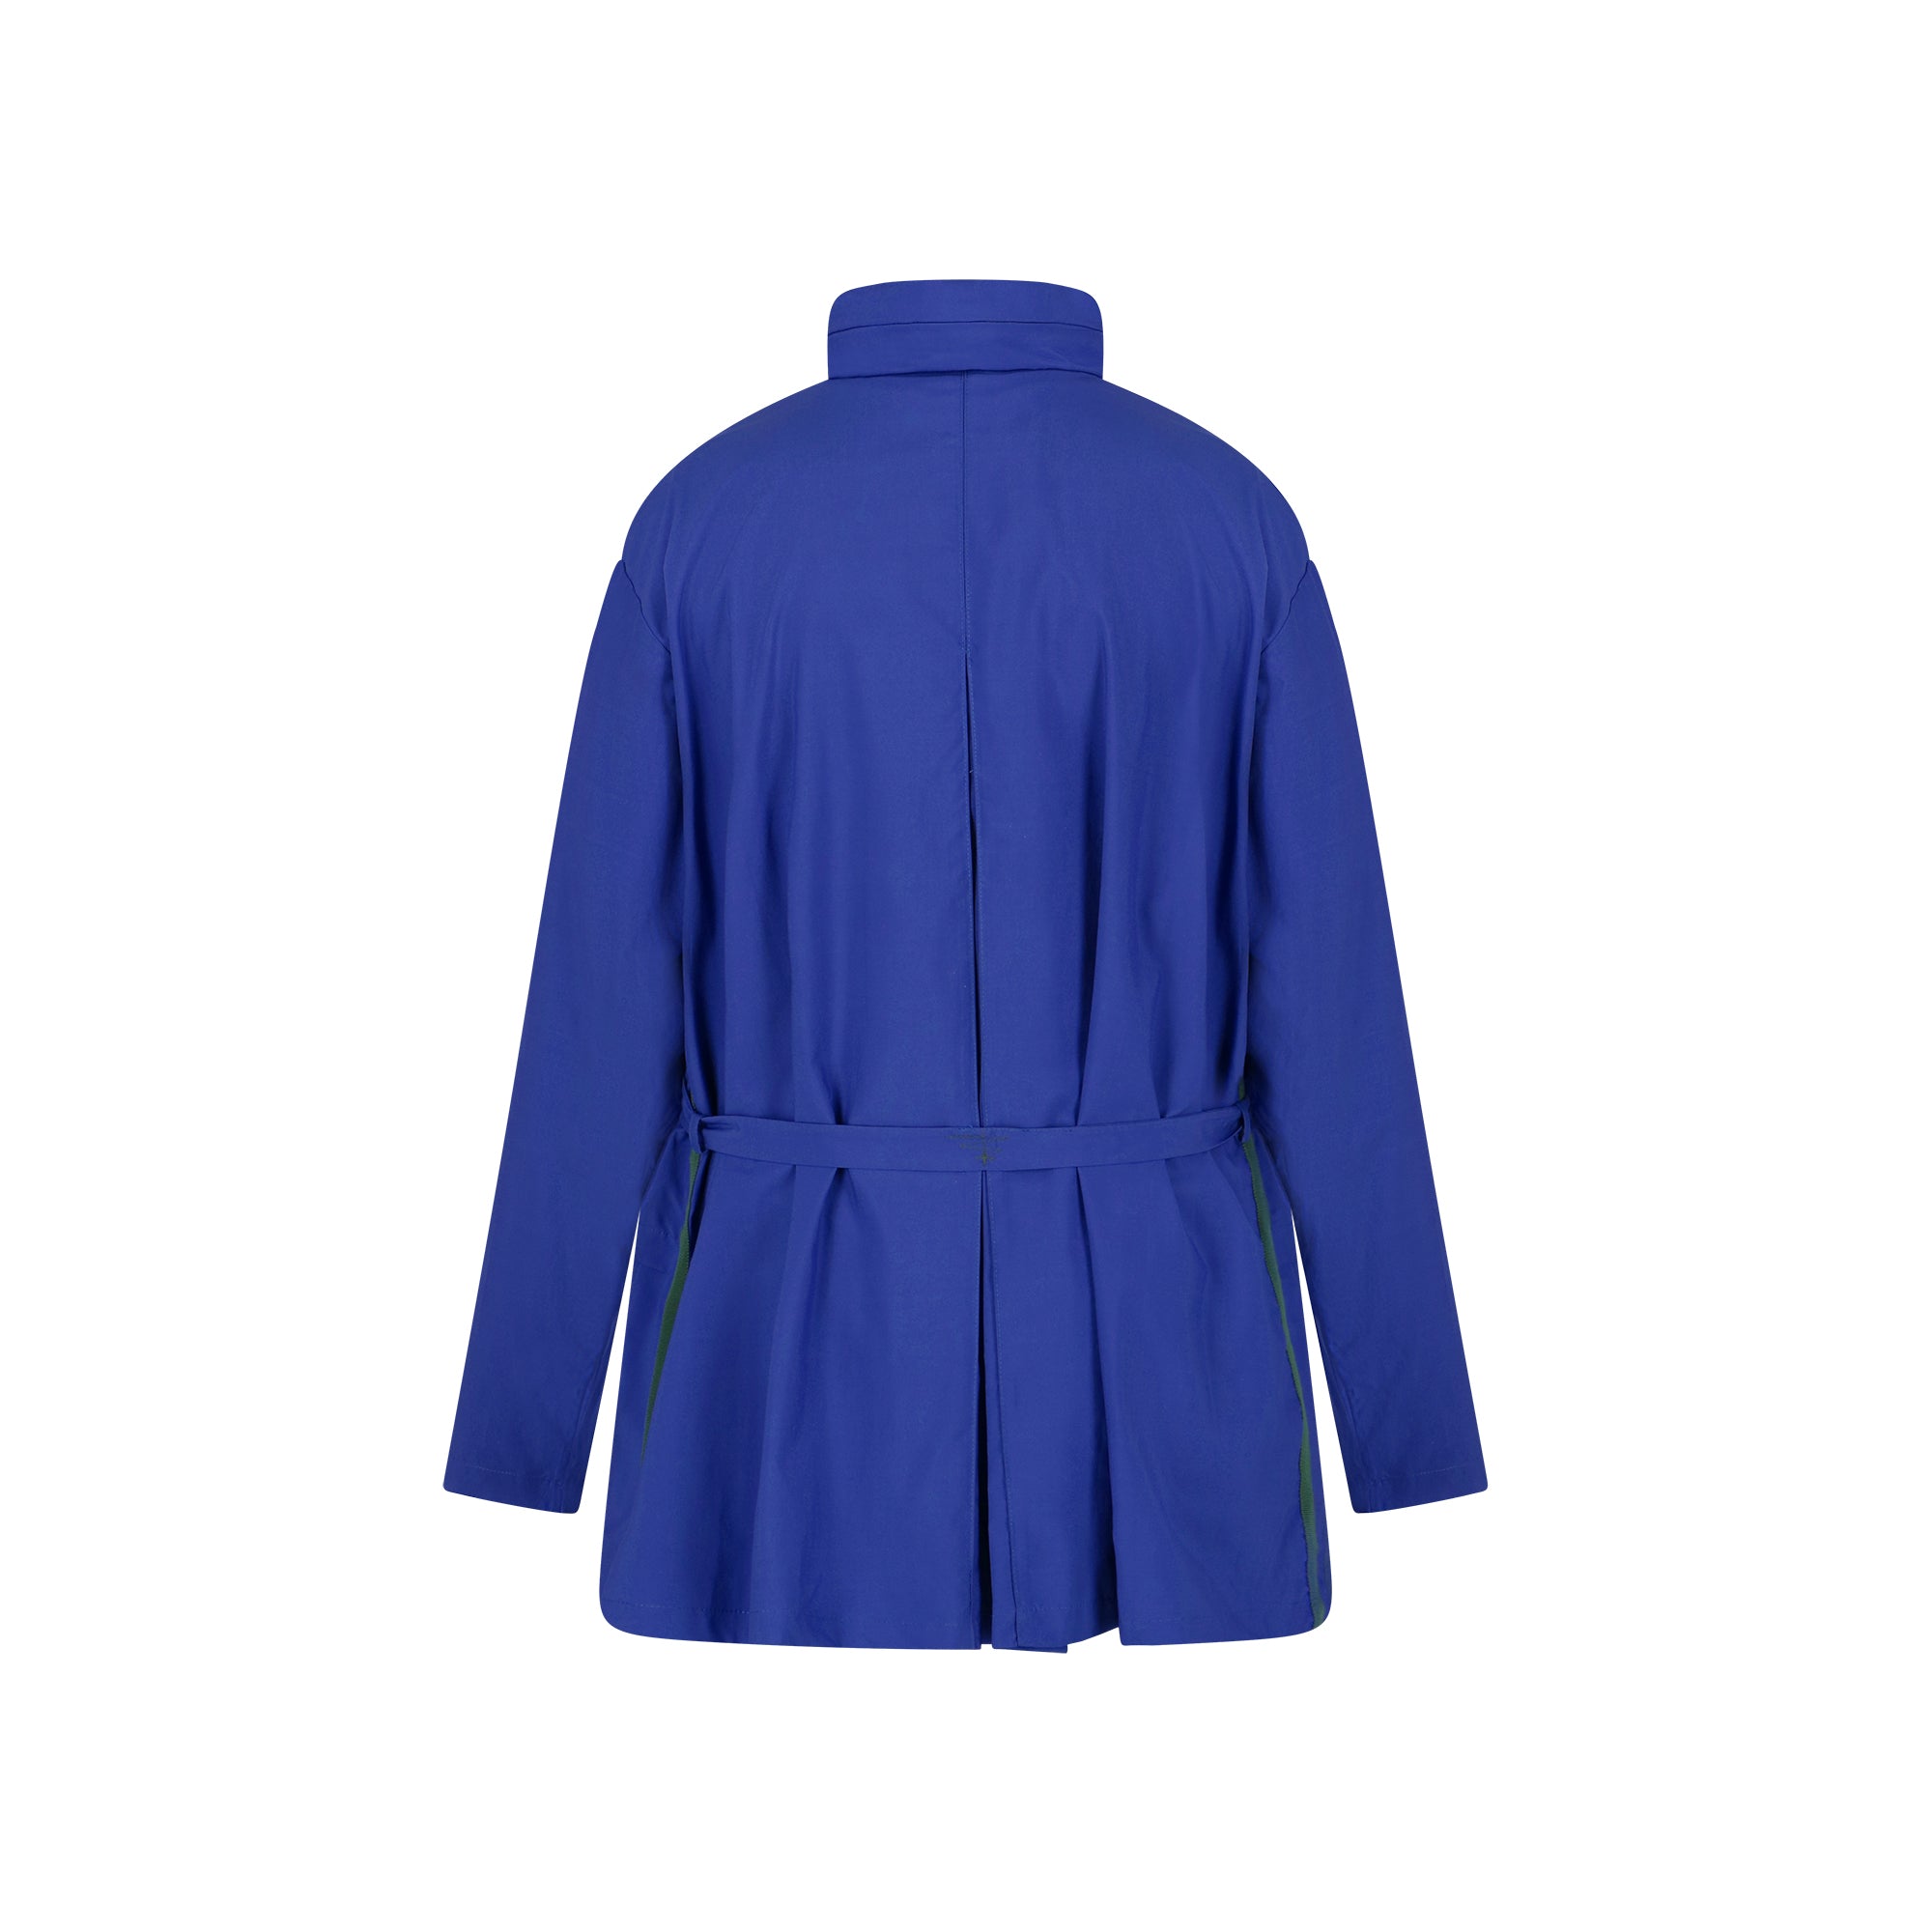 Bise raincoat - Royal Blue color - back view